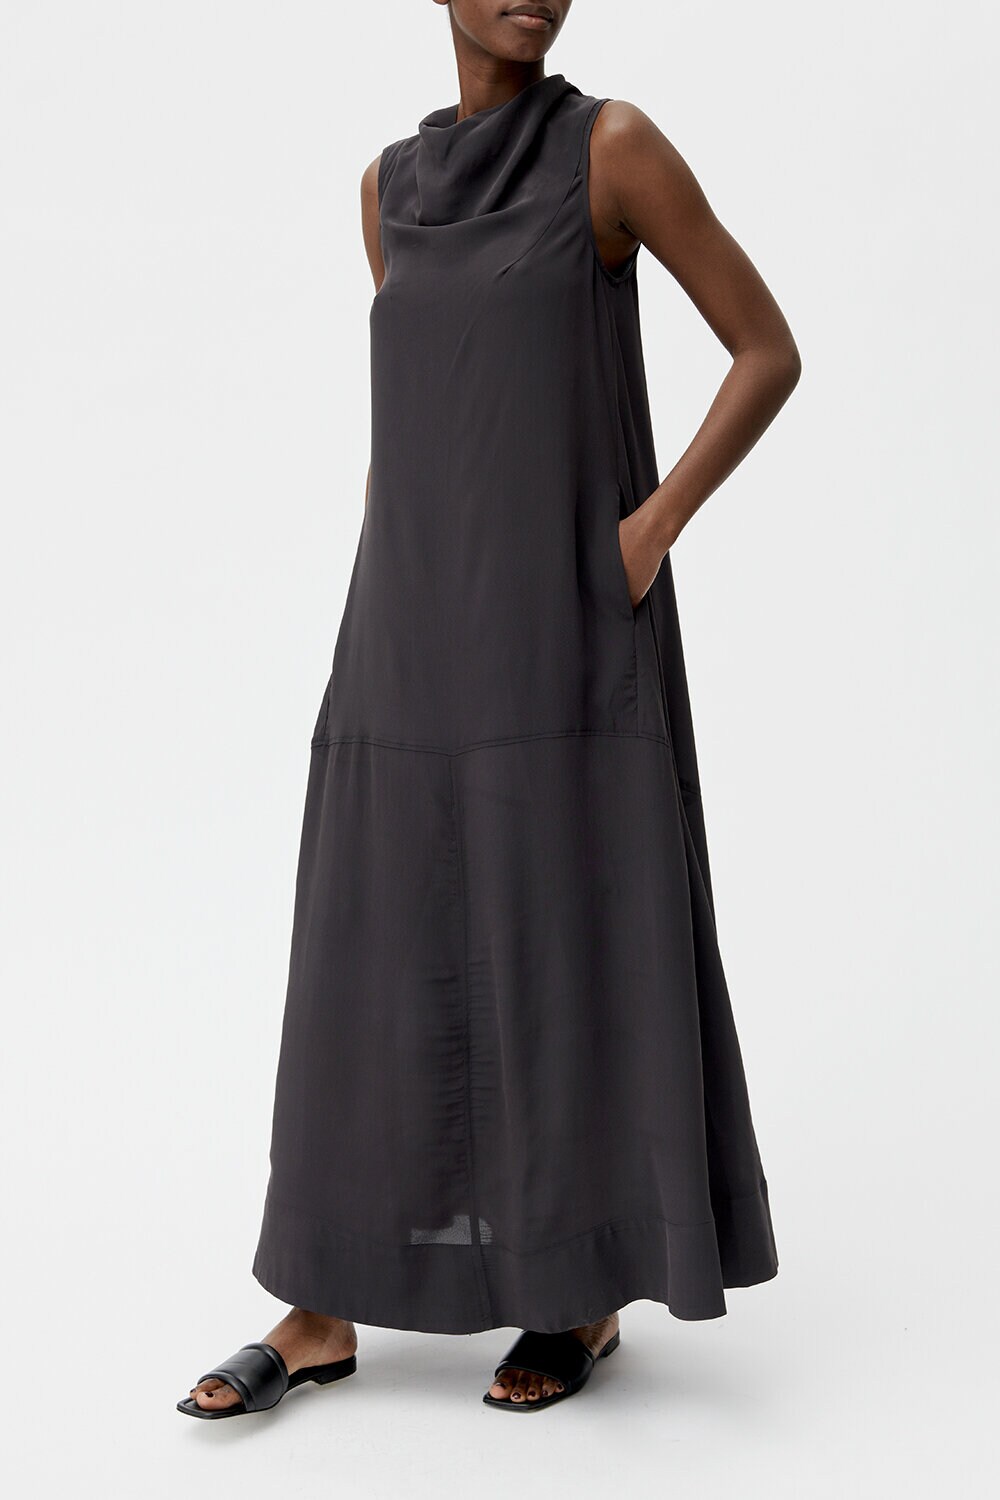 Ozell Dress